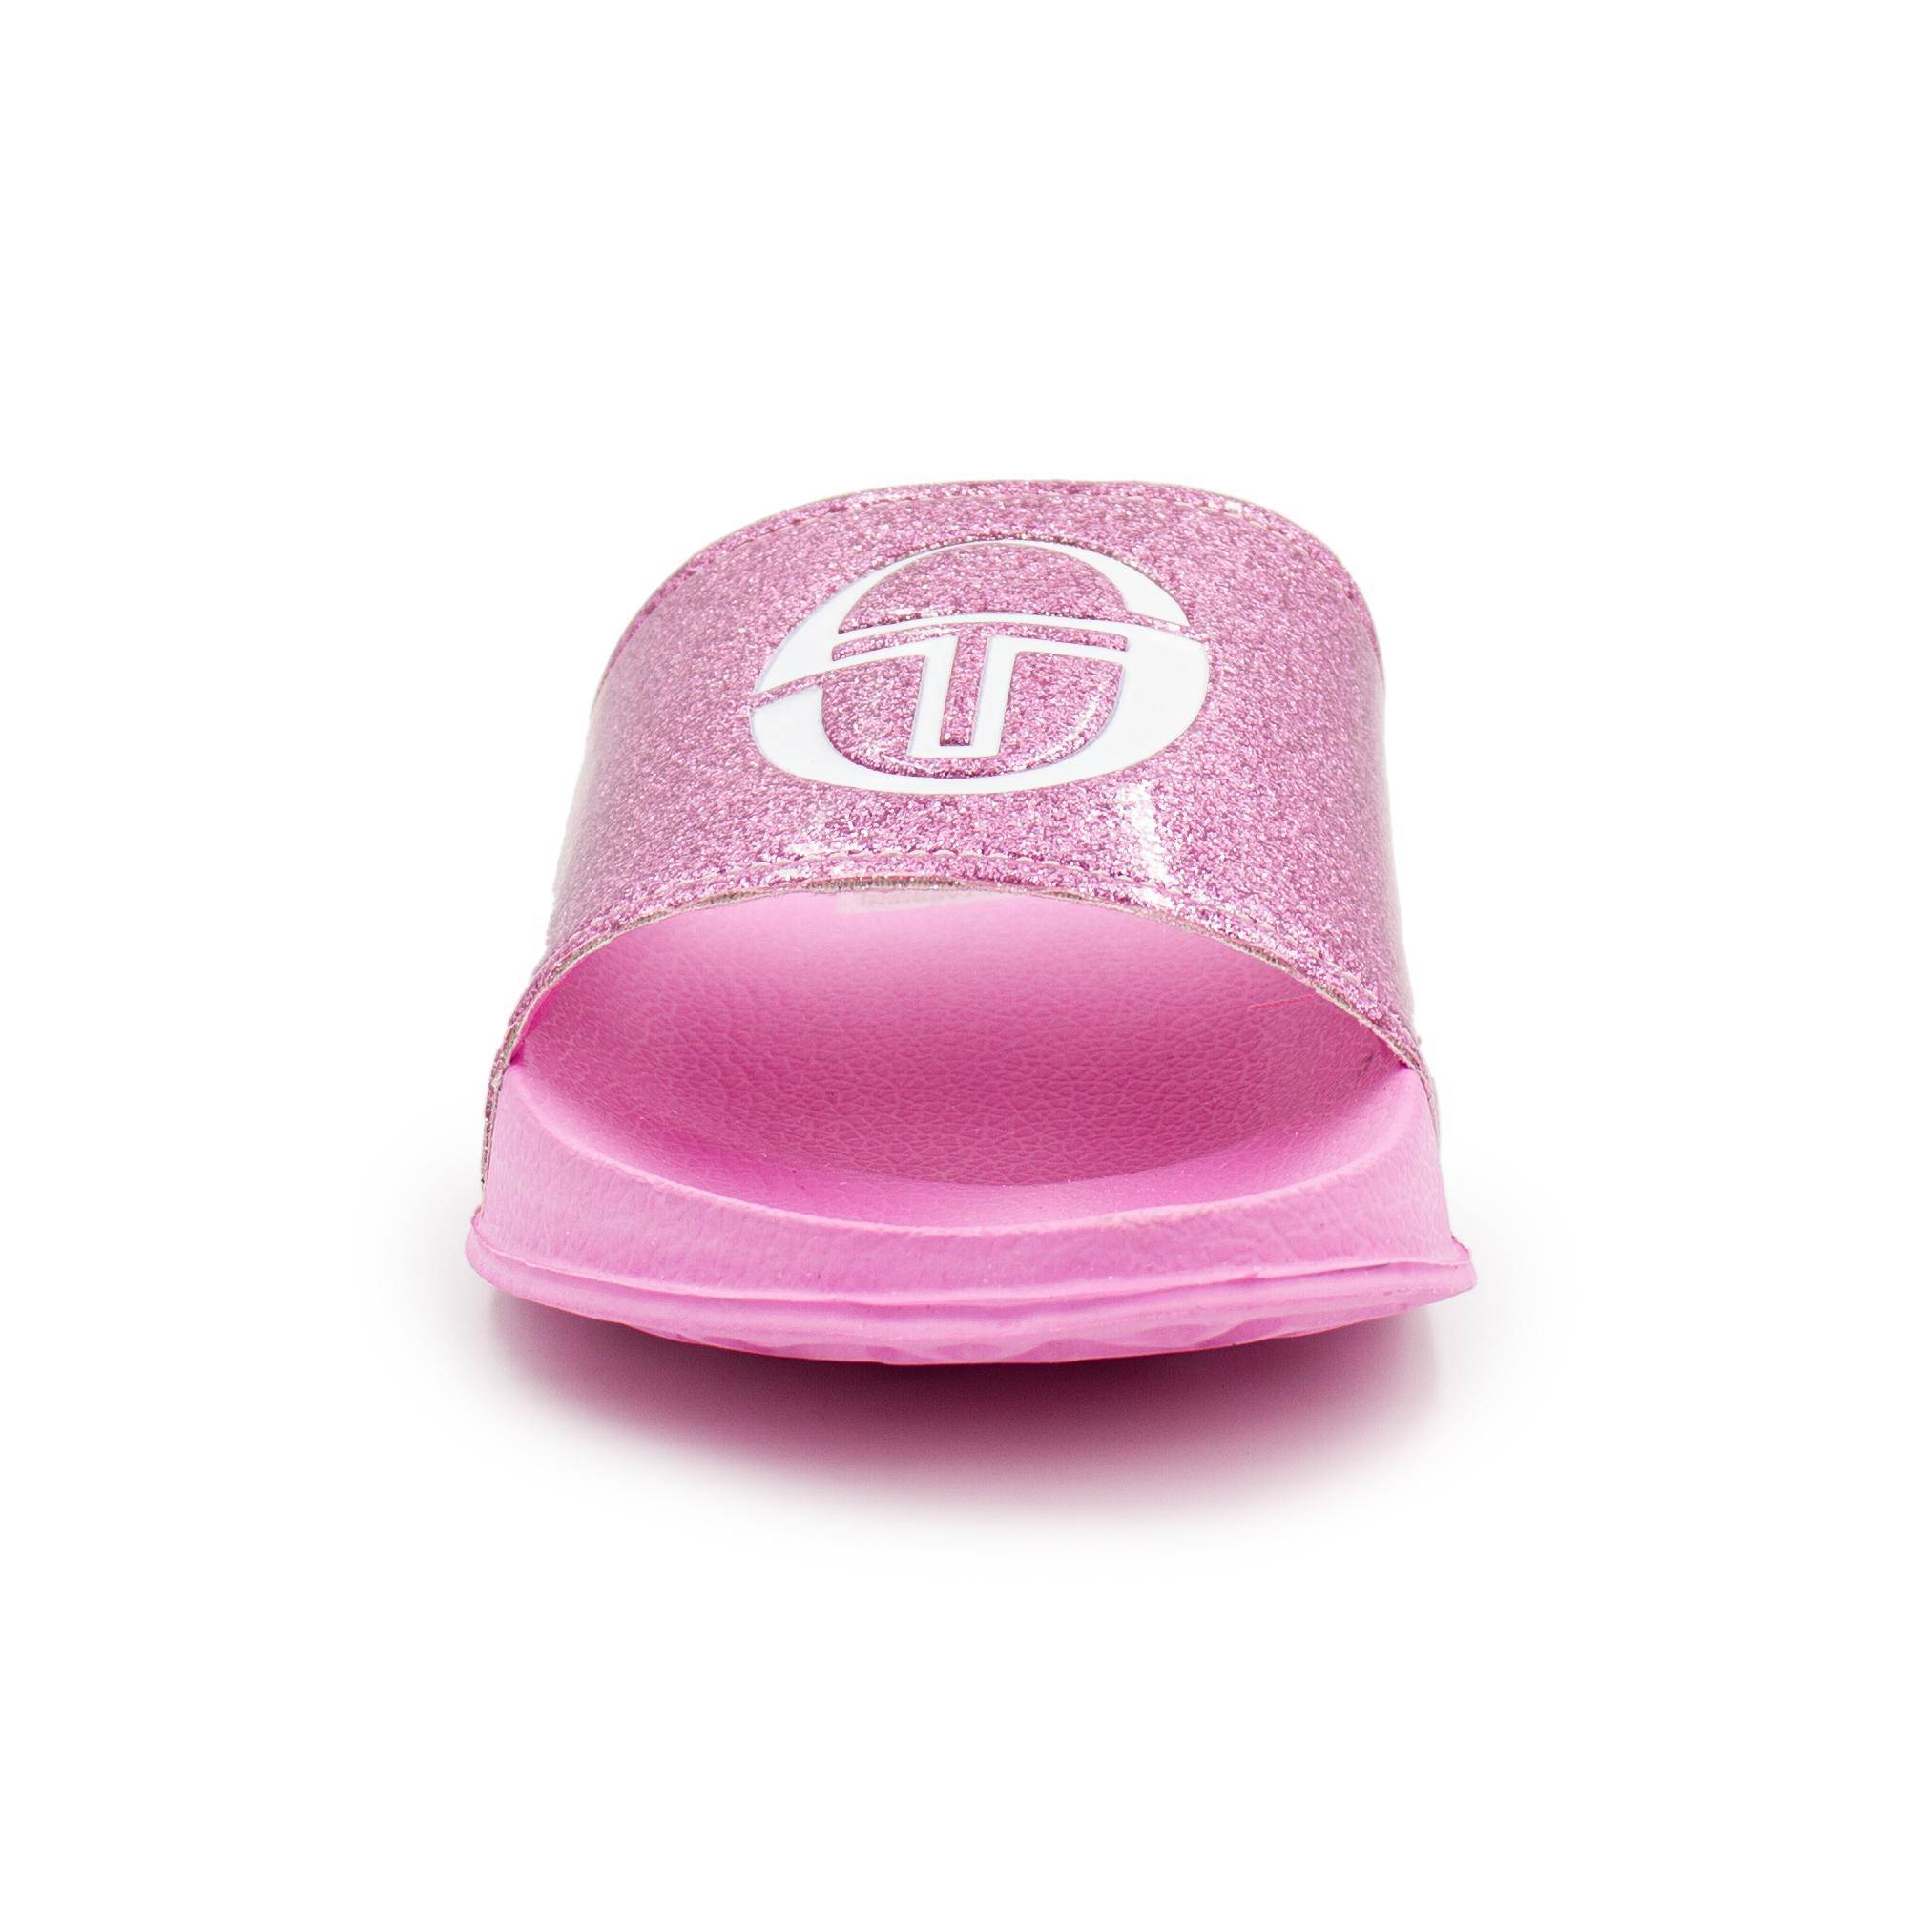 Женские сланцы Sergio Tacchini (REMIX GLITTER STW219006), розовые, цвет розовый, размер 40 - фото 3